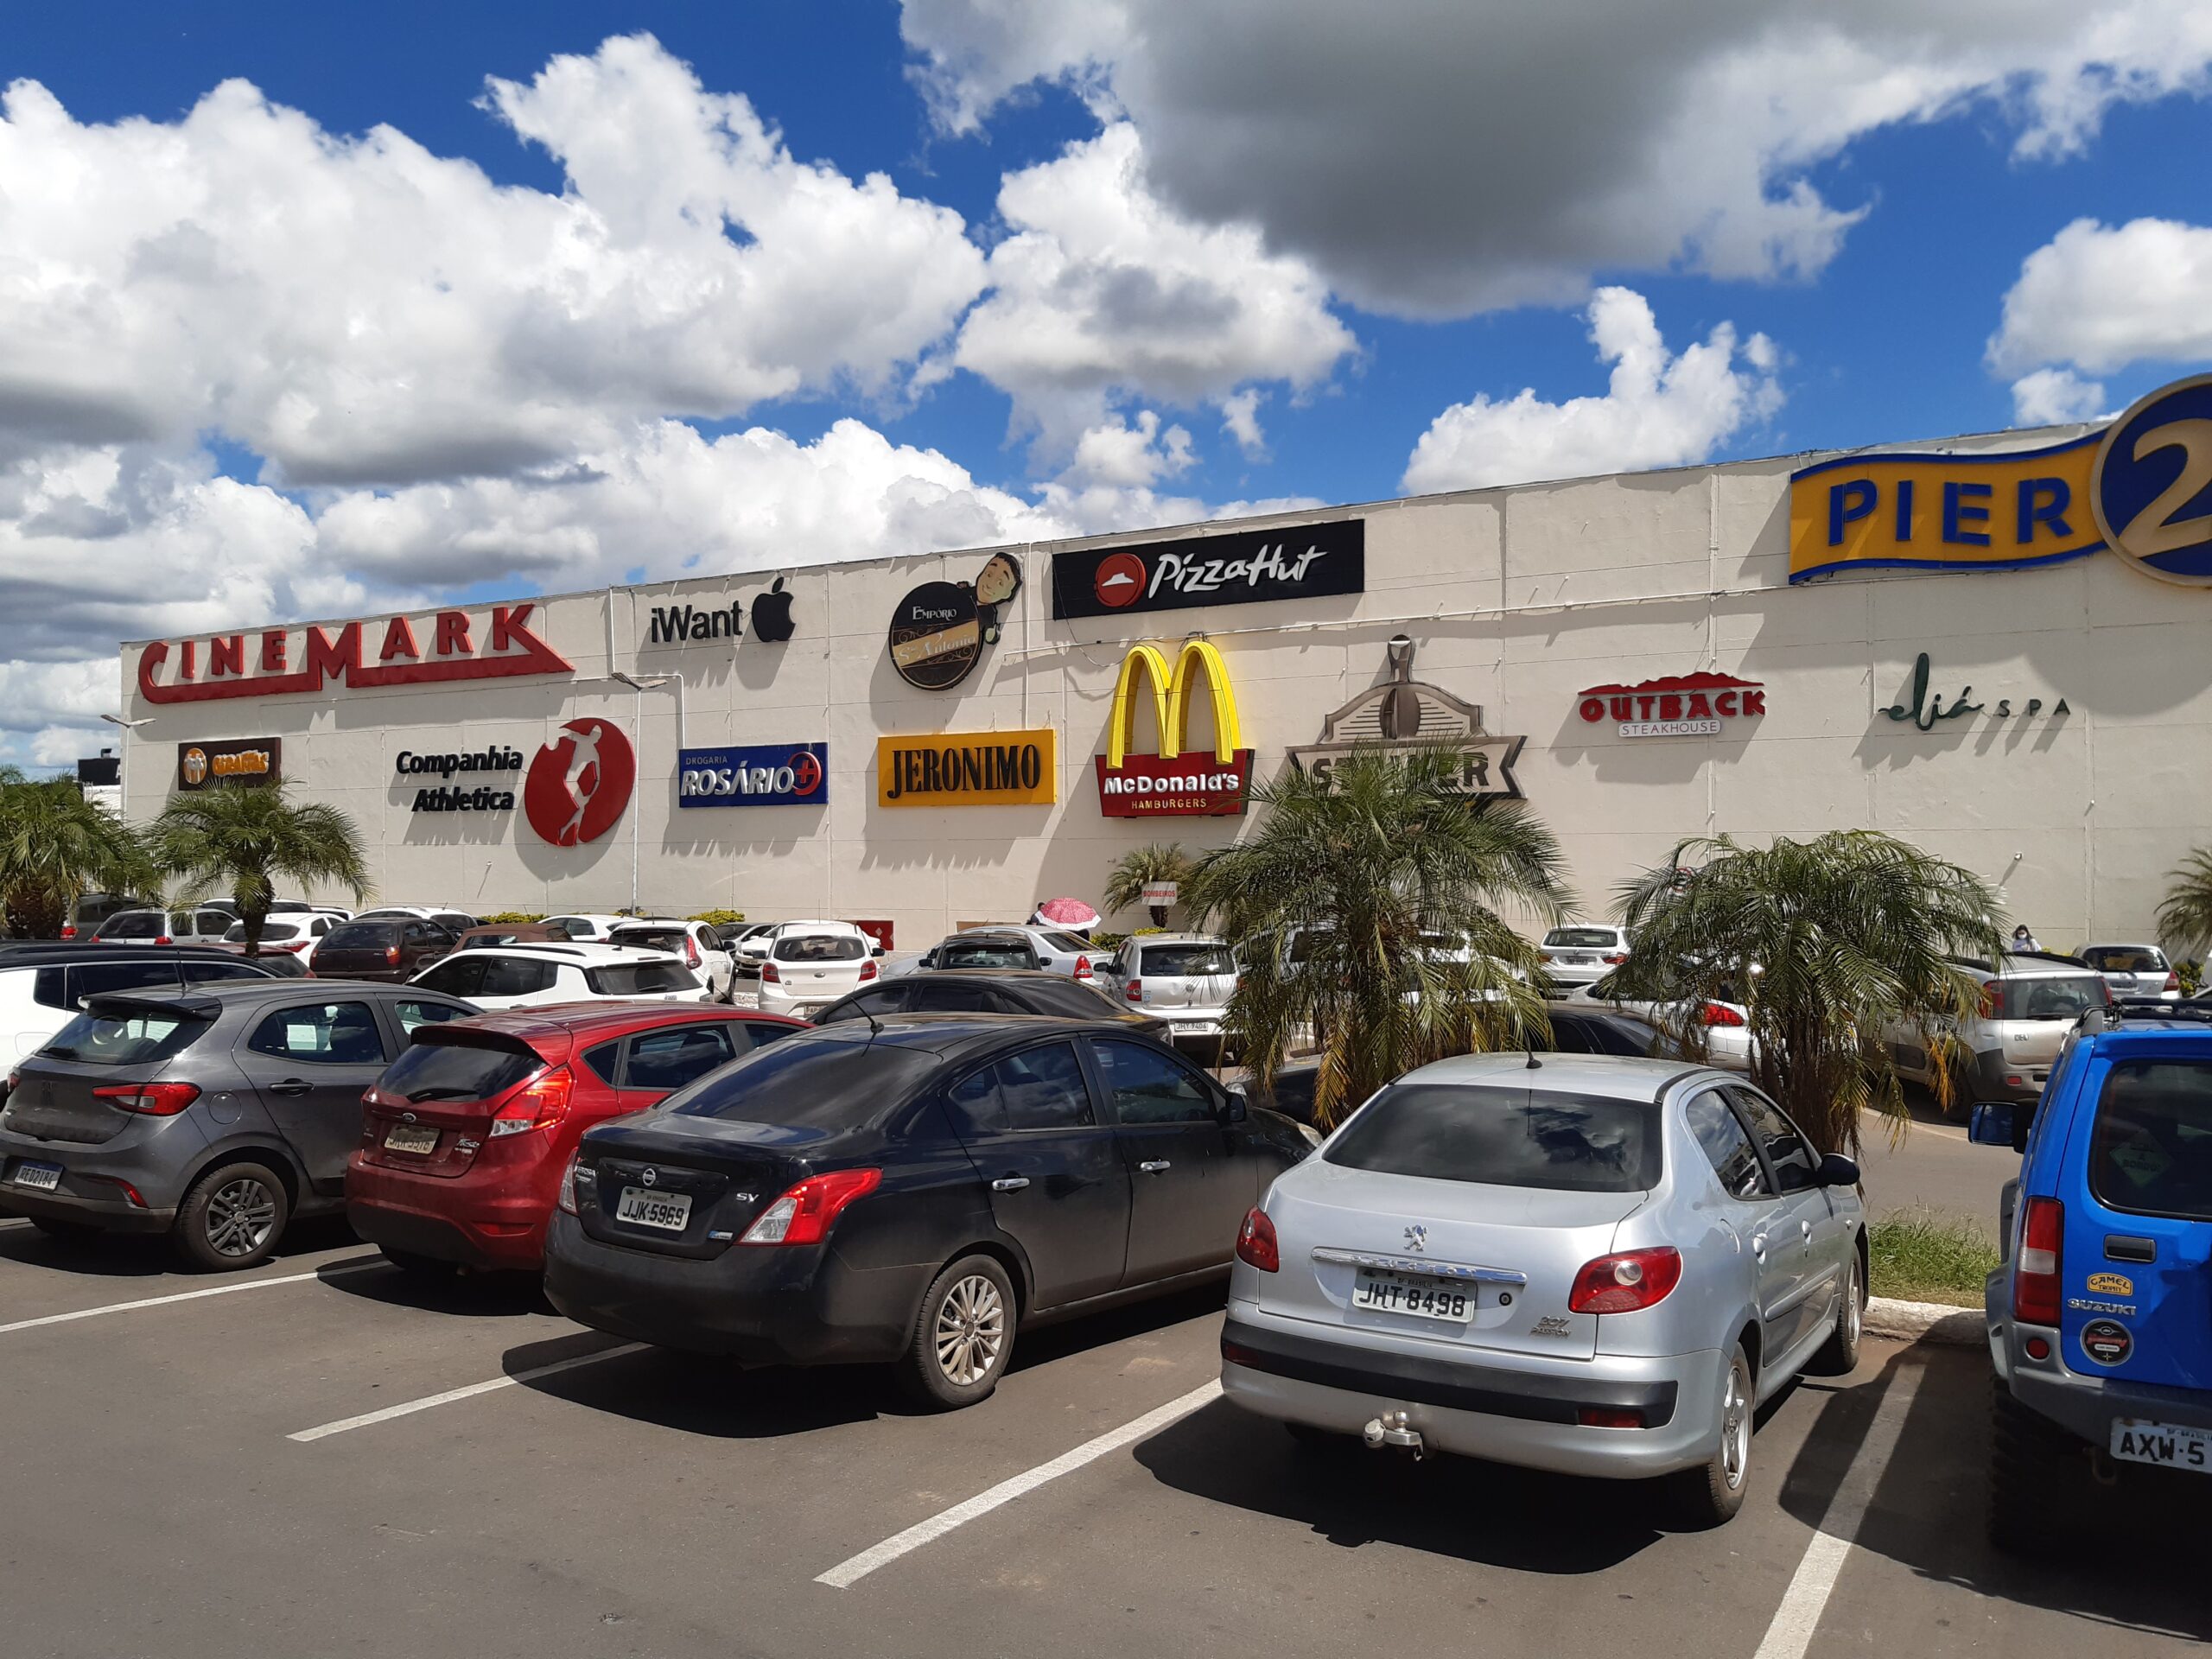 Shopping Pier 21 - Estacionamento Coberto, Setor de Clubes Esportivos Sul  Trecho 2 - Asa Sul, Brasília - DF, CEP 70200-002